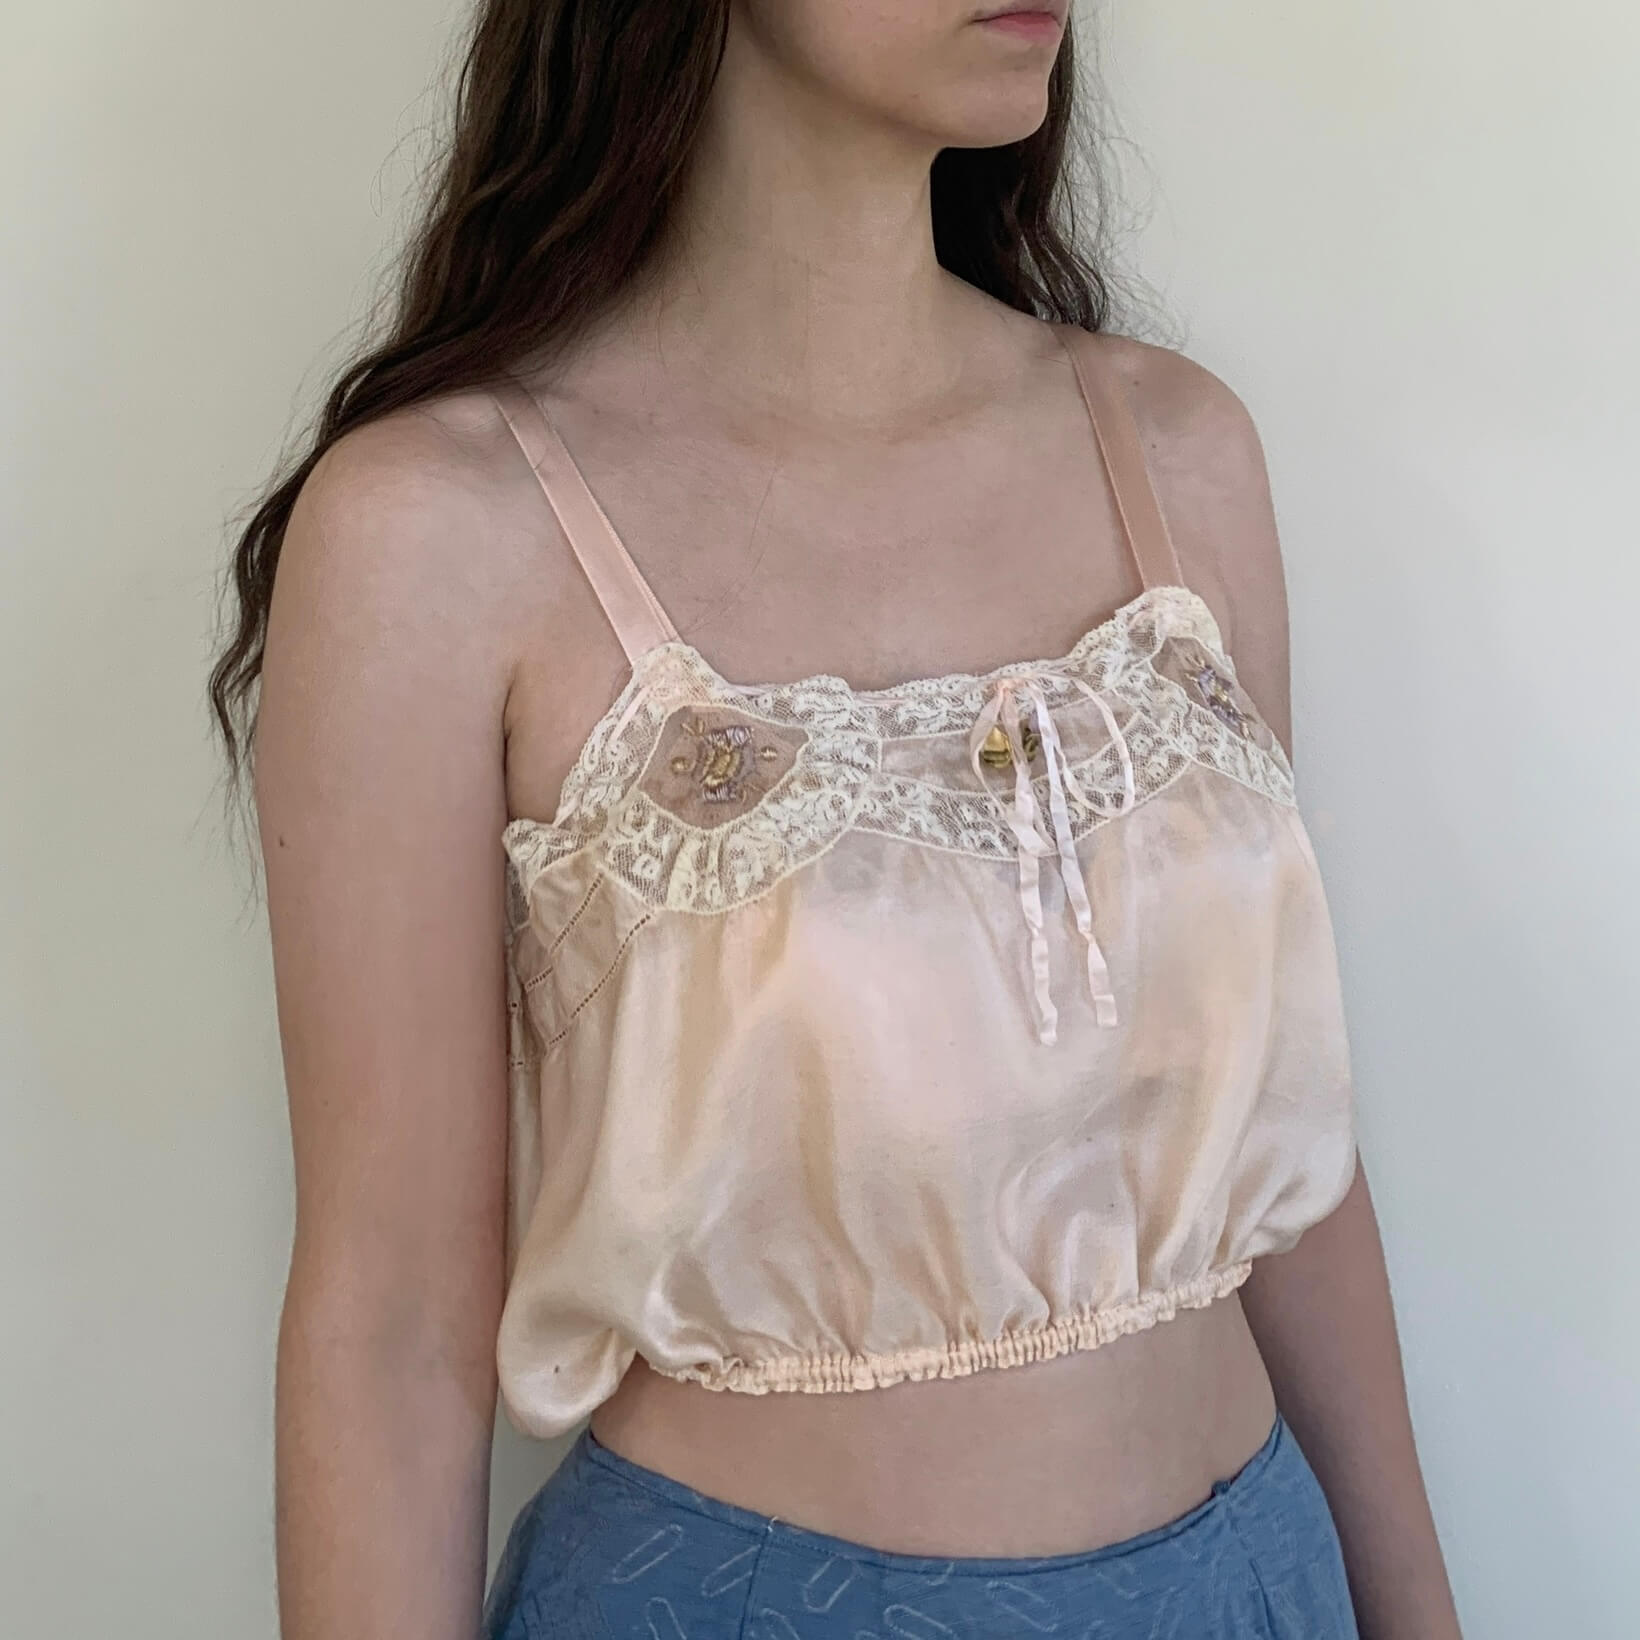 model wearing a pink vintage undergarment